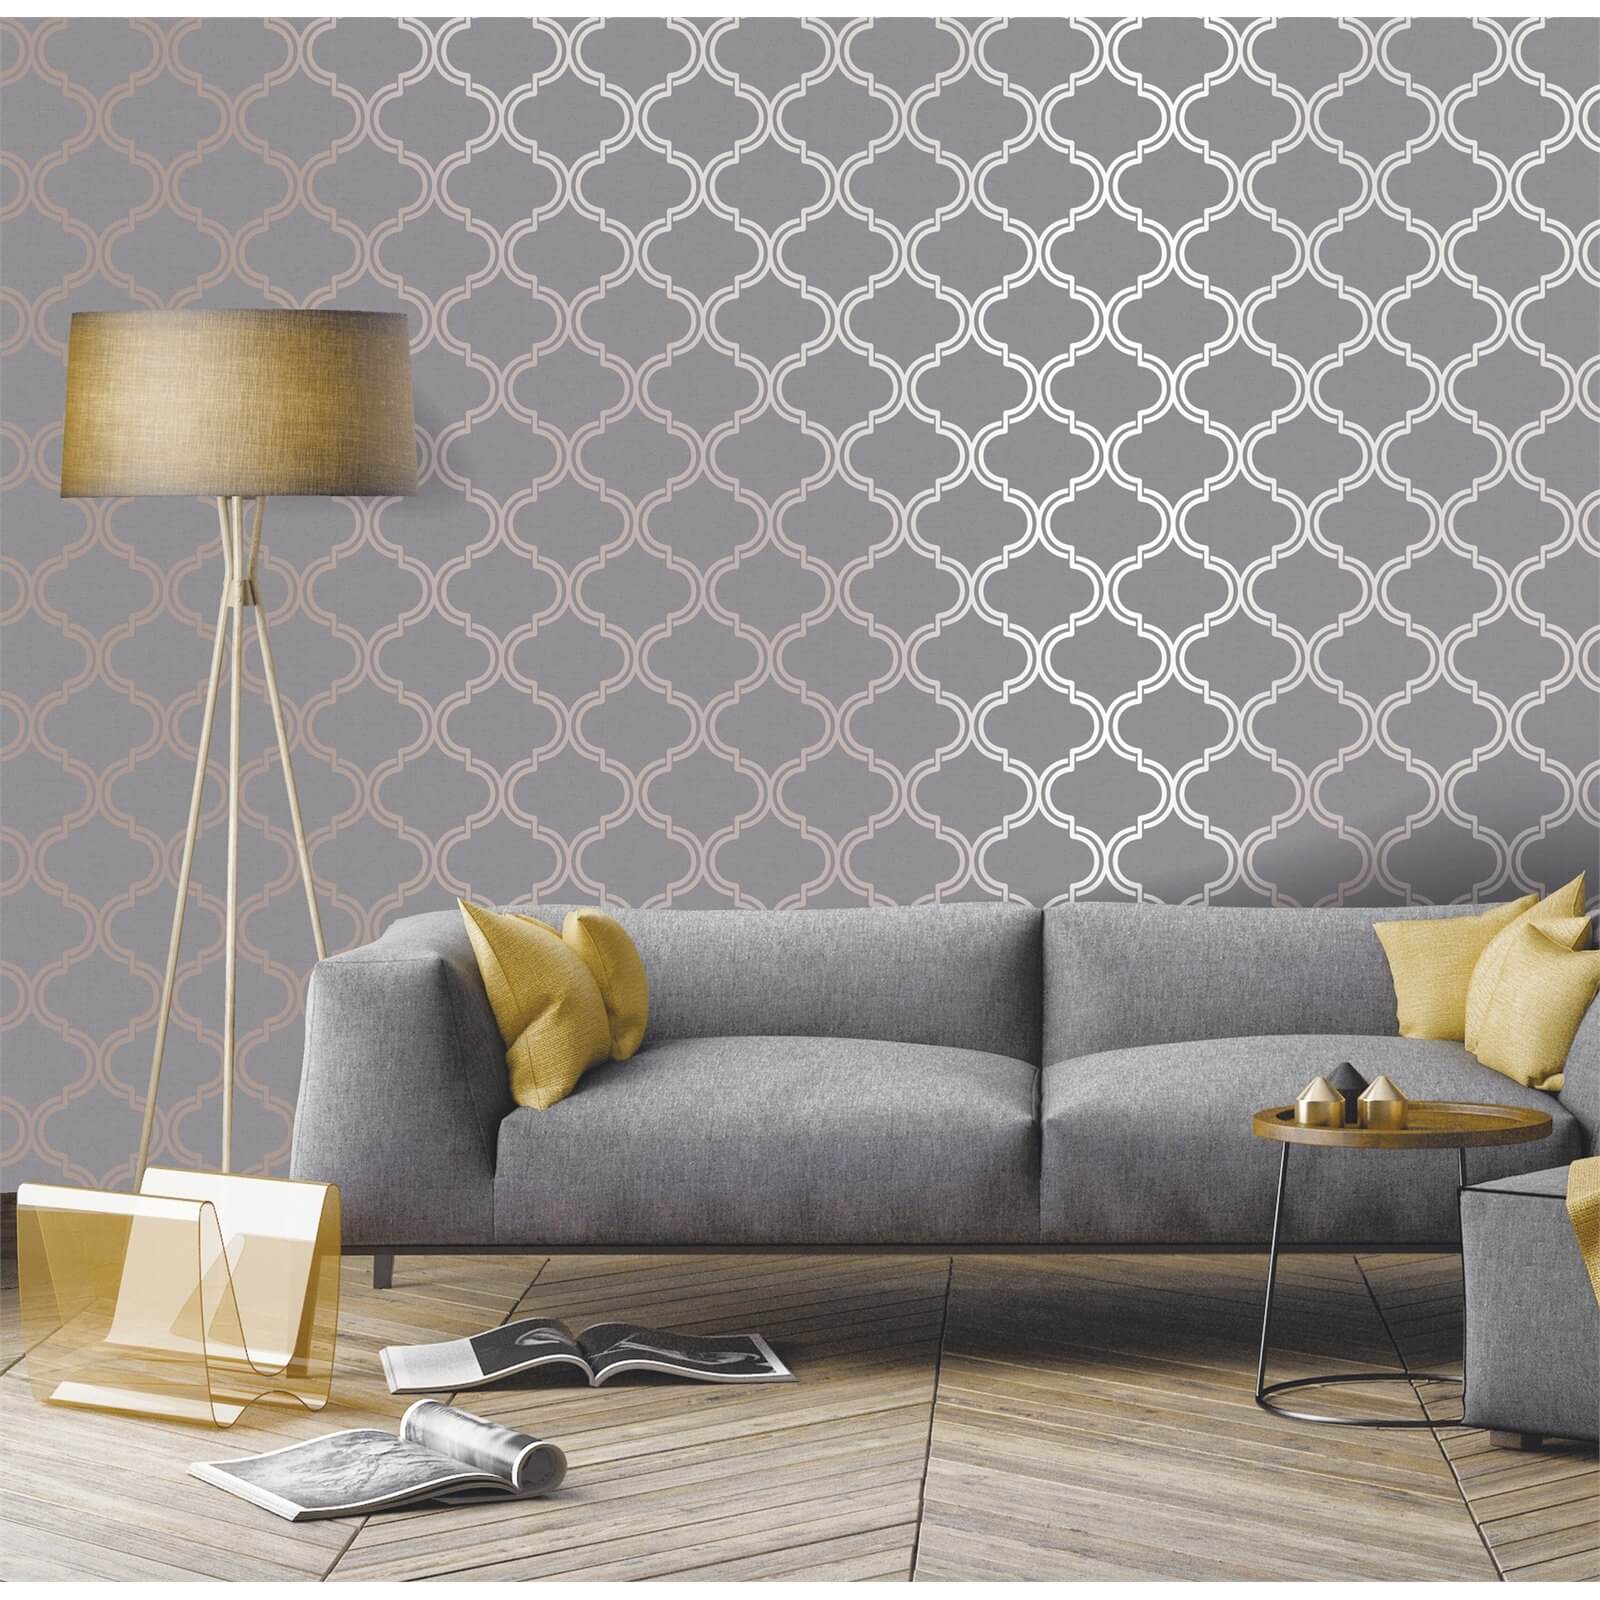 Holden Decor Glistening Geo Trellis Geometric Smooth Metallic Dark Grey and Rose Gold Wallpaper